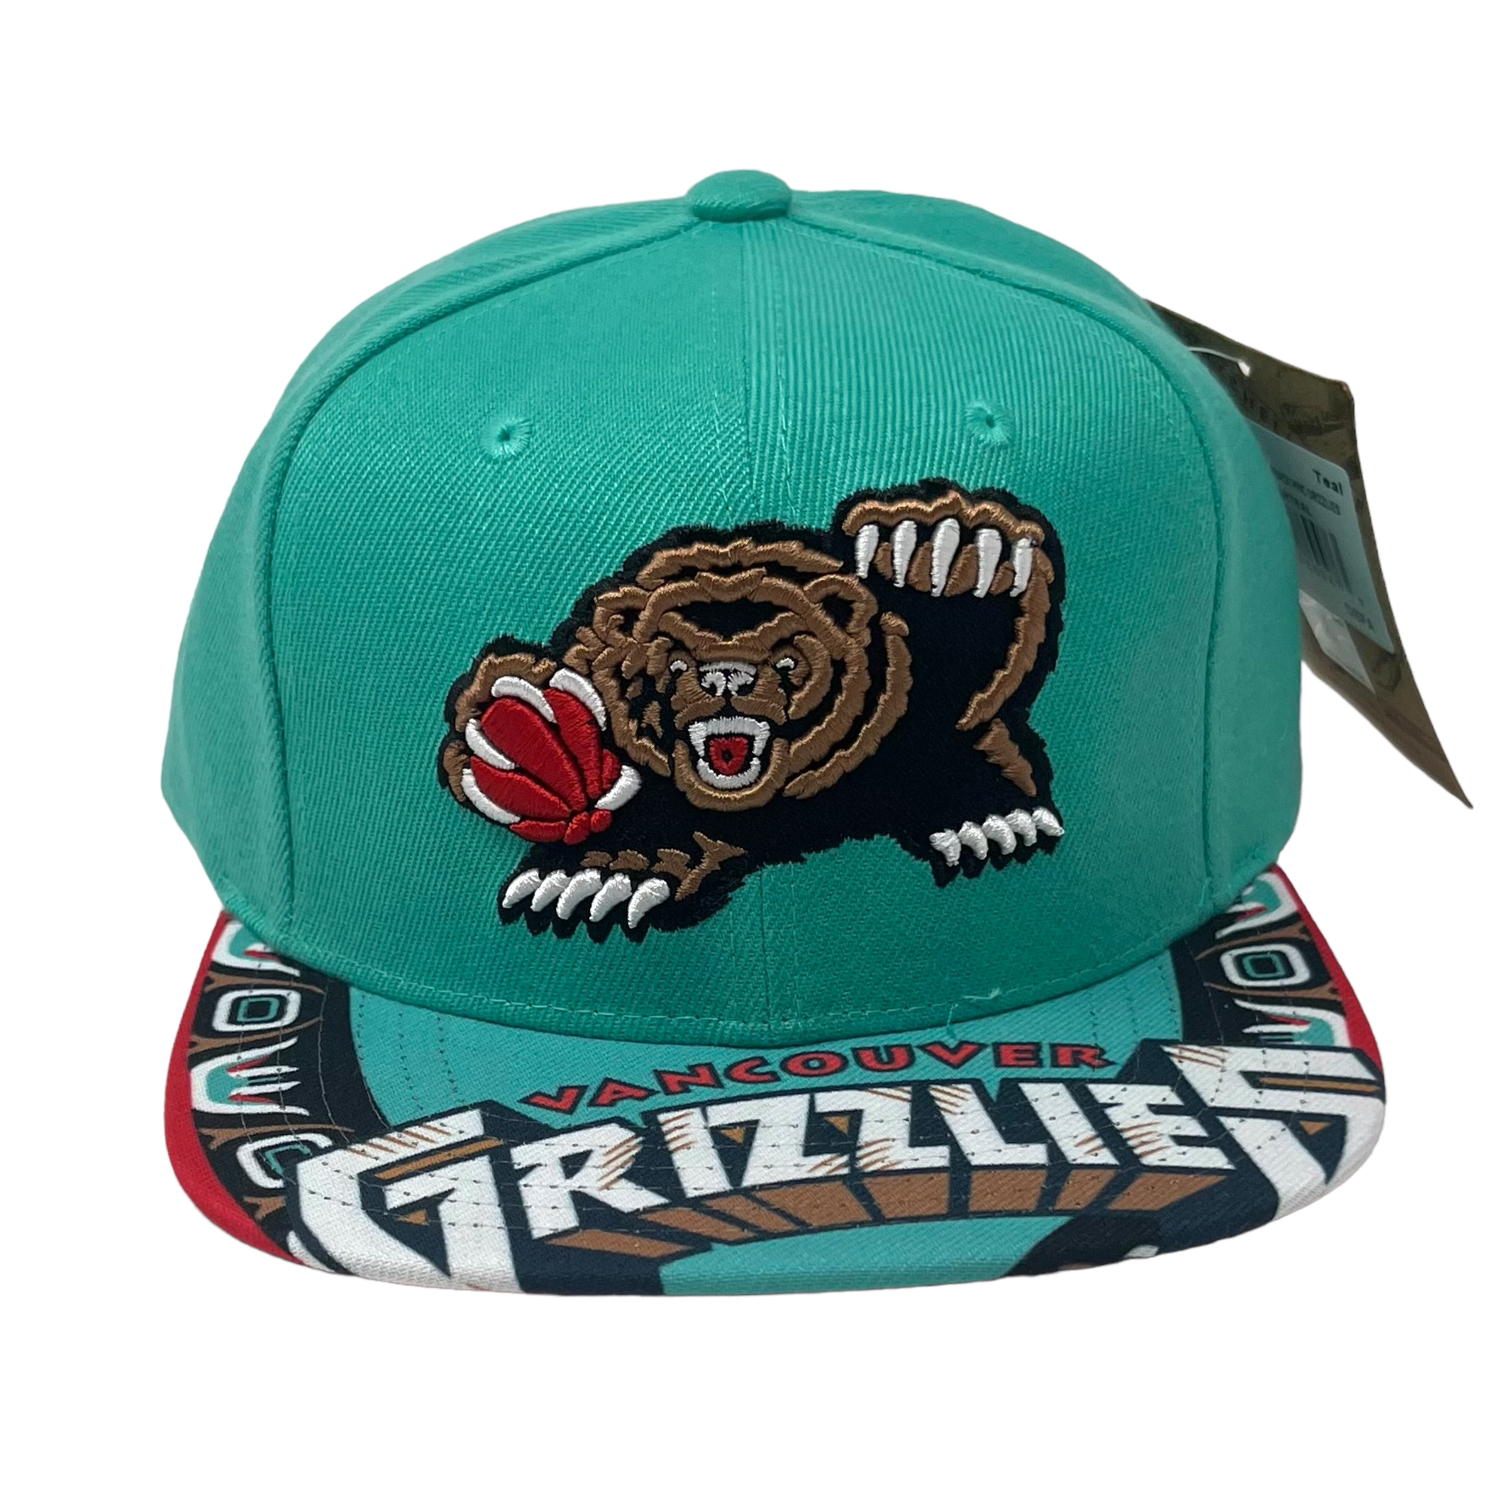 Vancouver Grizzlies Men’s NBA Pop Mitchell & Ness Snapback Hat